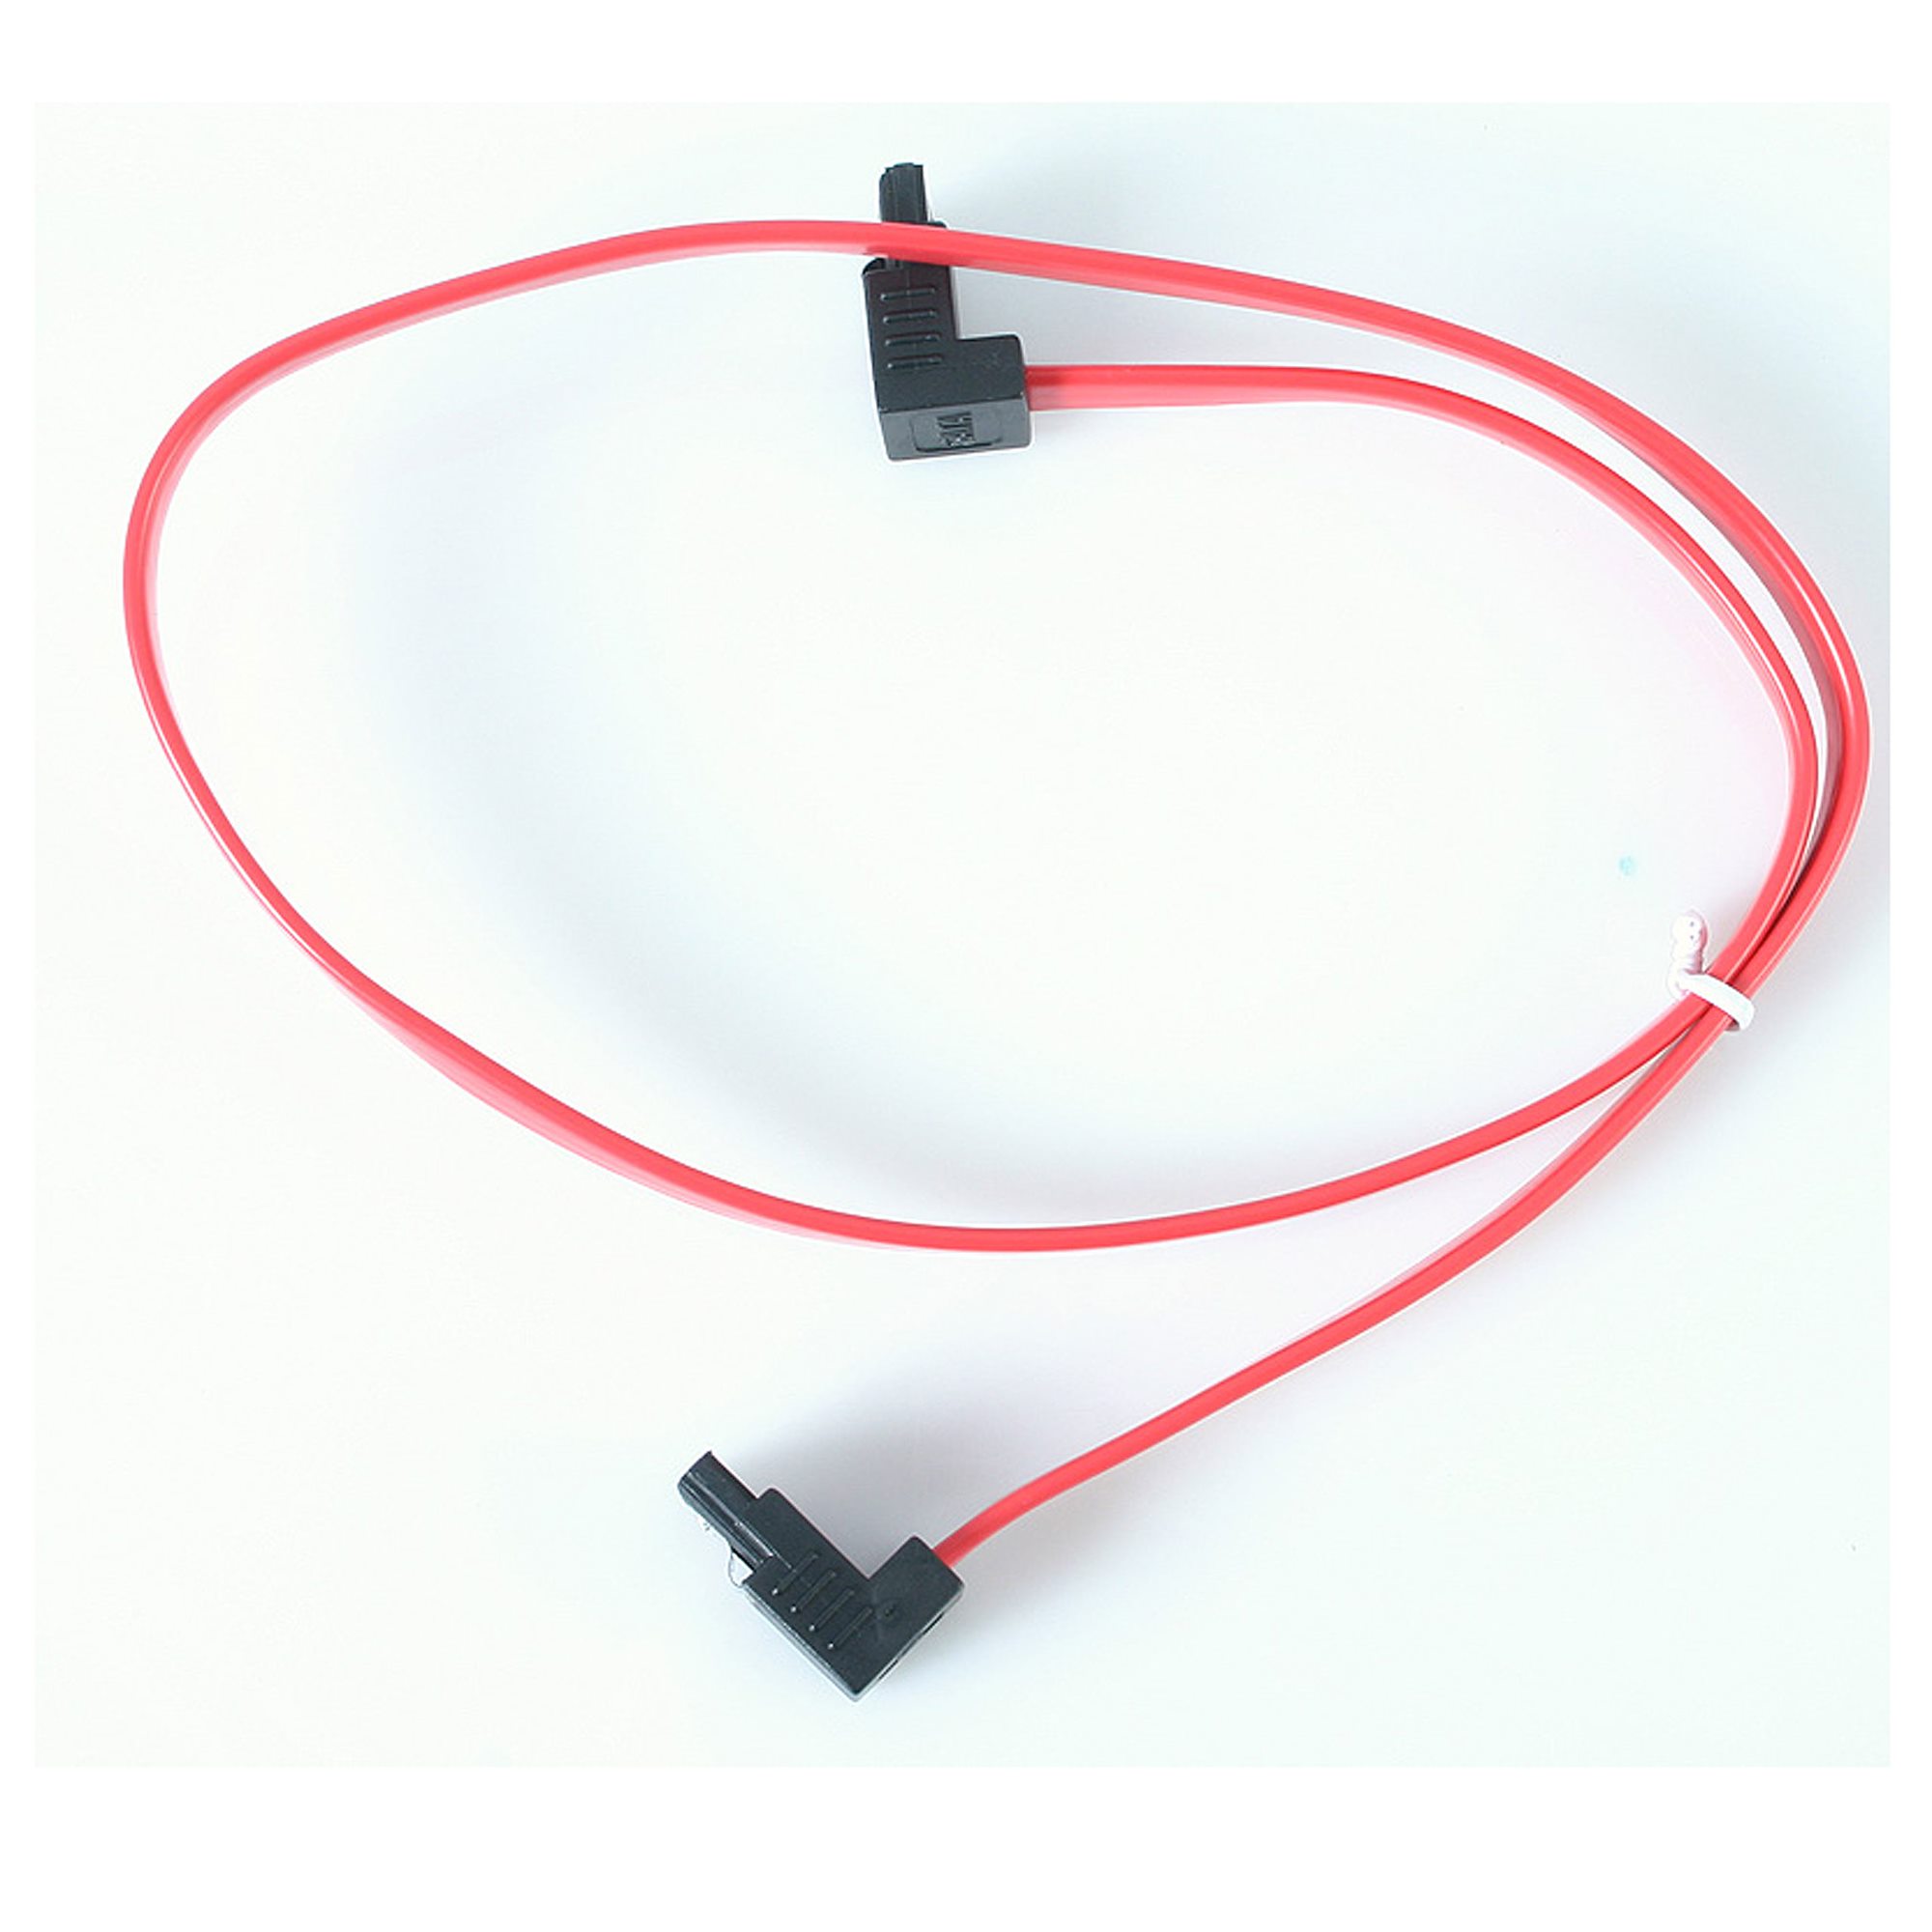 StarTech SATA Serial ATA Cable (Red, 24)